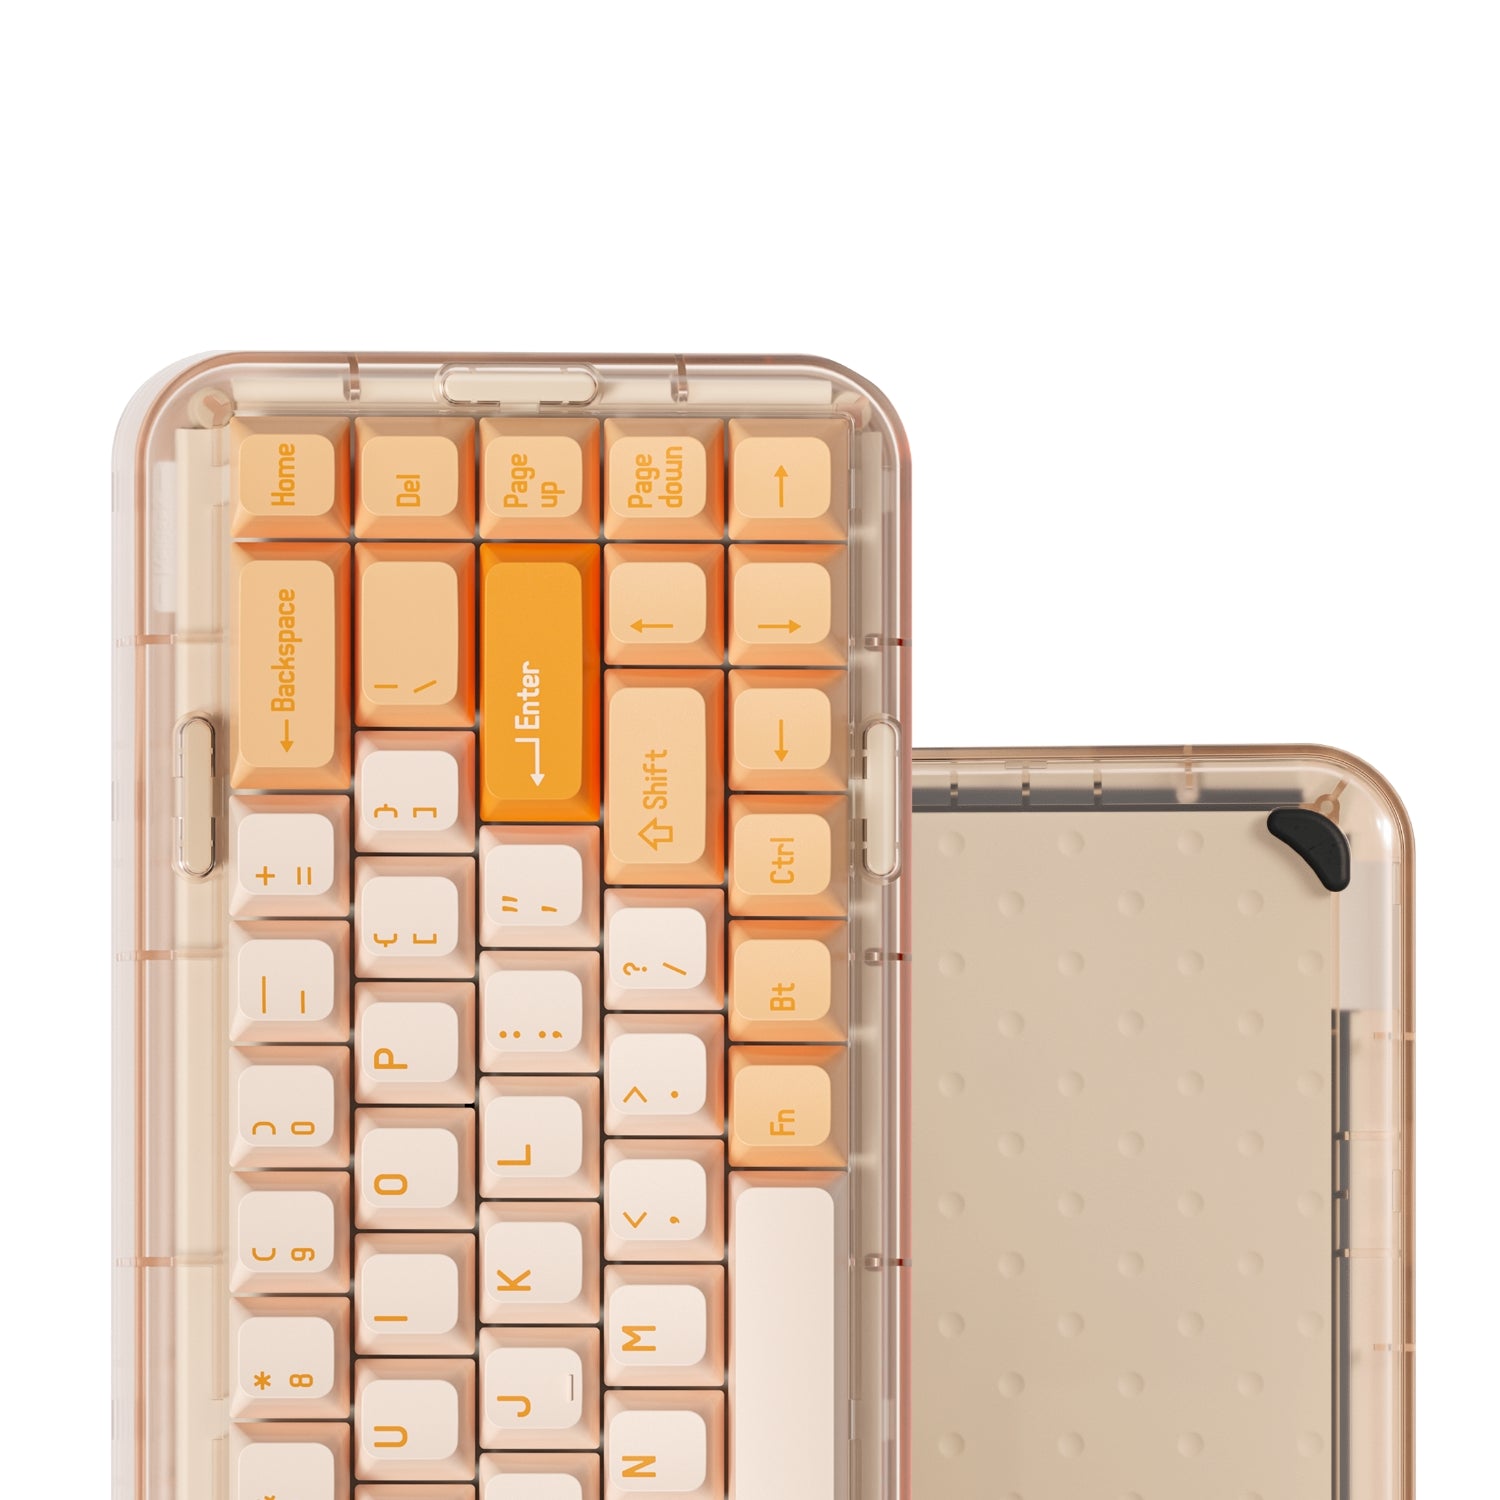 MelGeek Mojo68 Rose Custom & Programmable Mechanical Keyboard